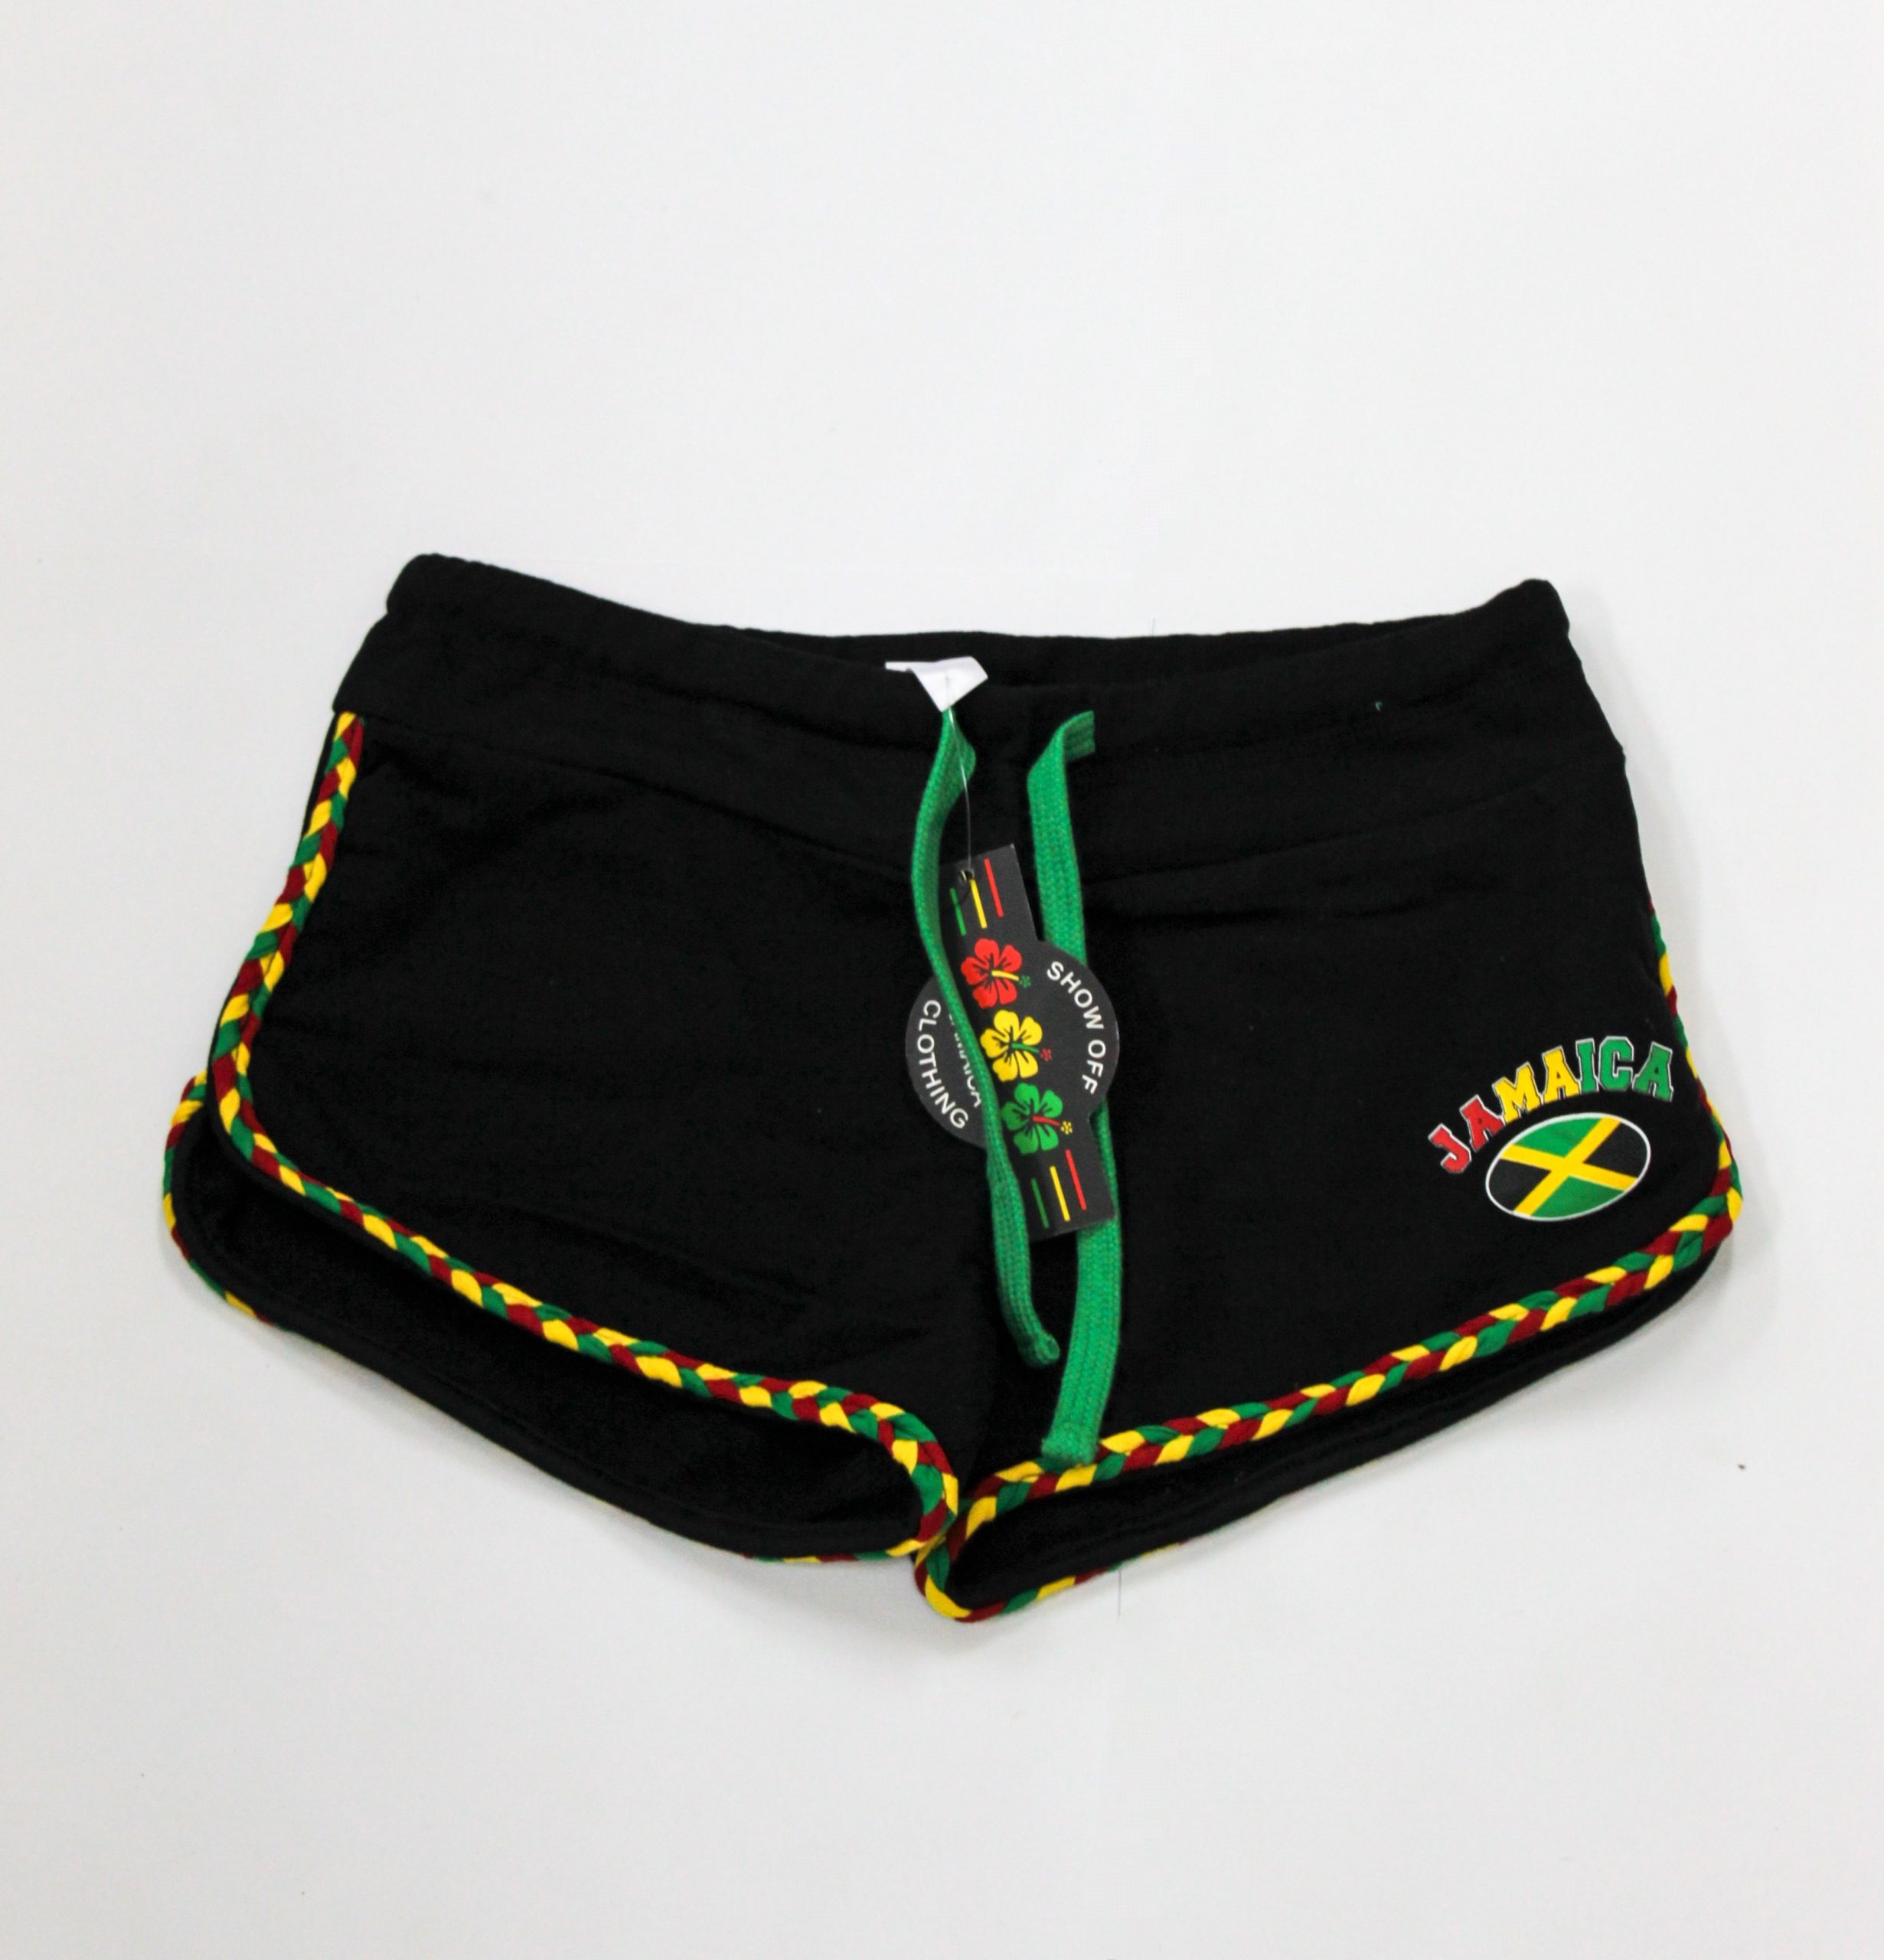 Jamaica Knit Jamaican Colors Border Shorts 876 Worldwide